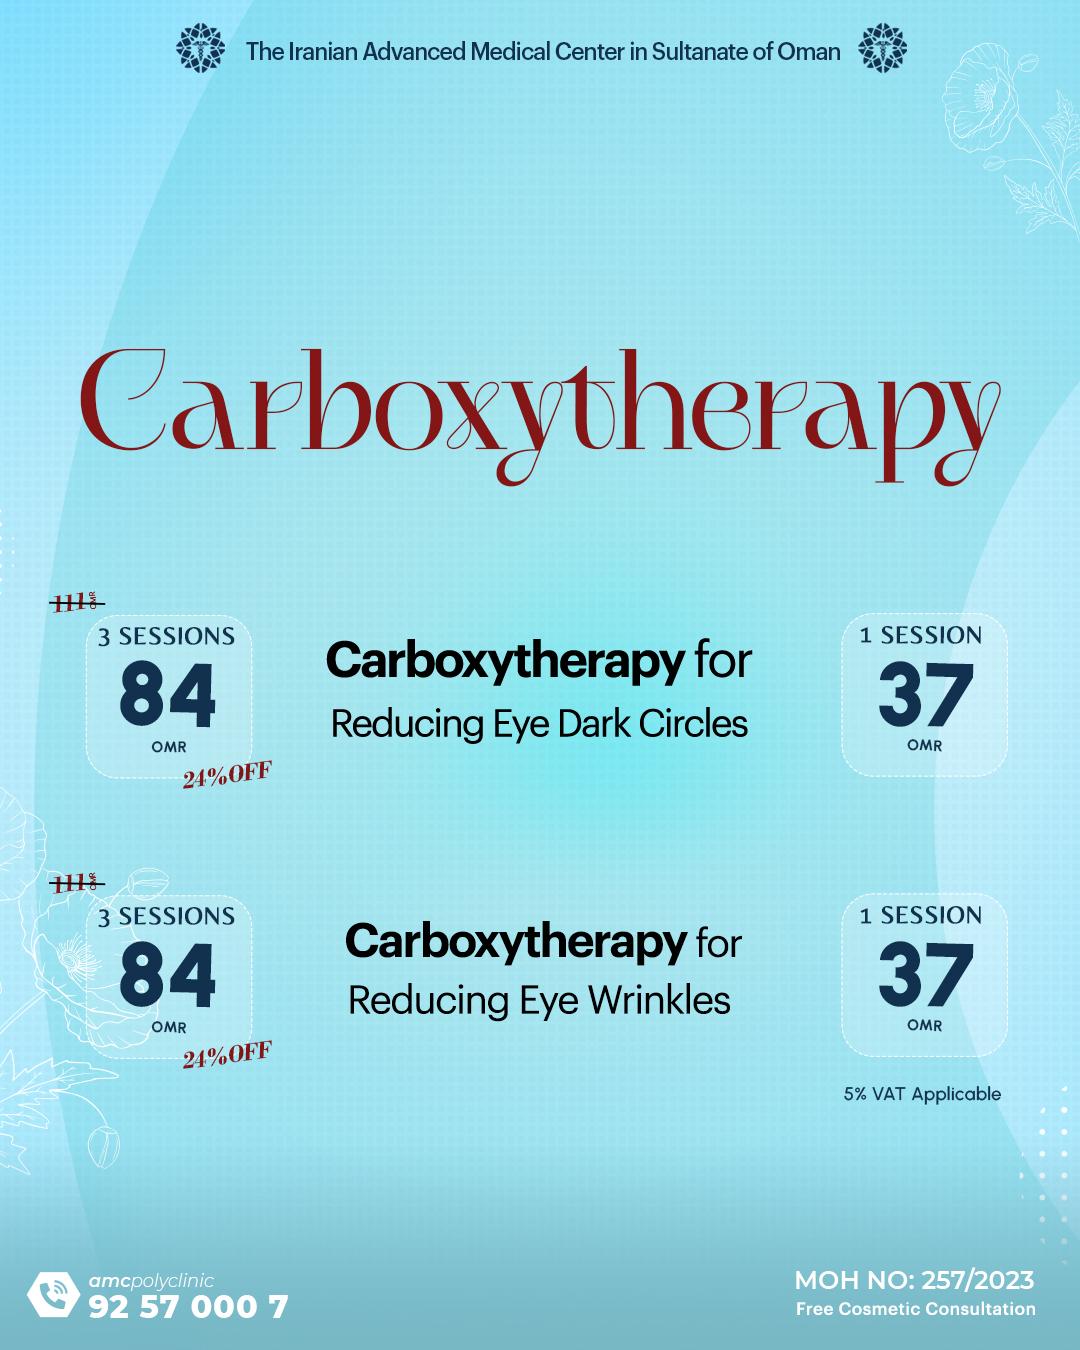 Carboxytherapy